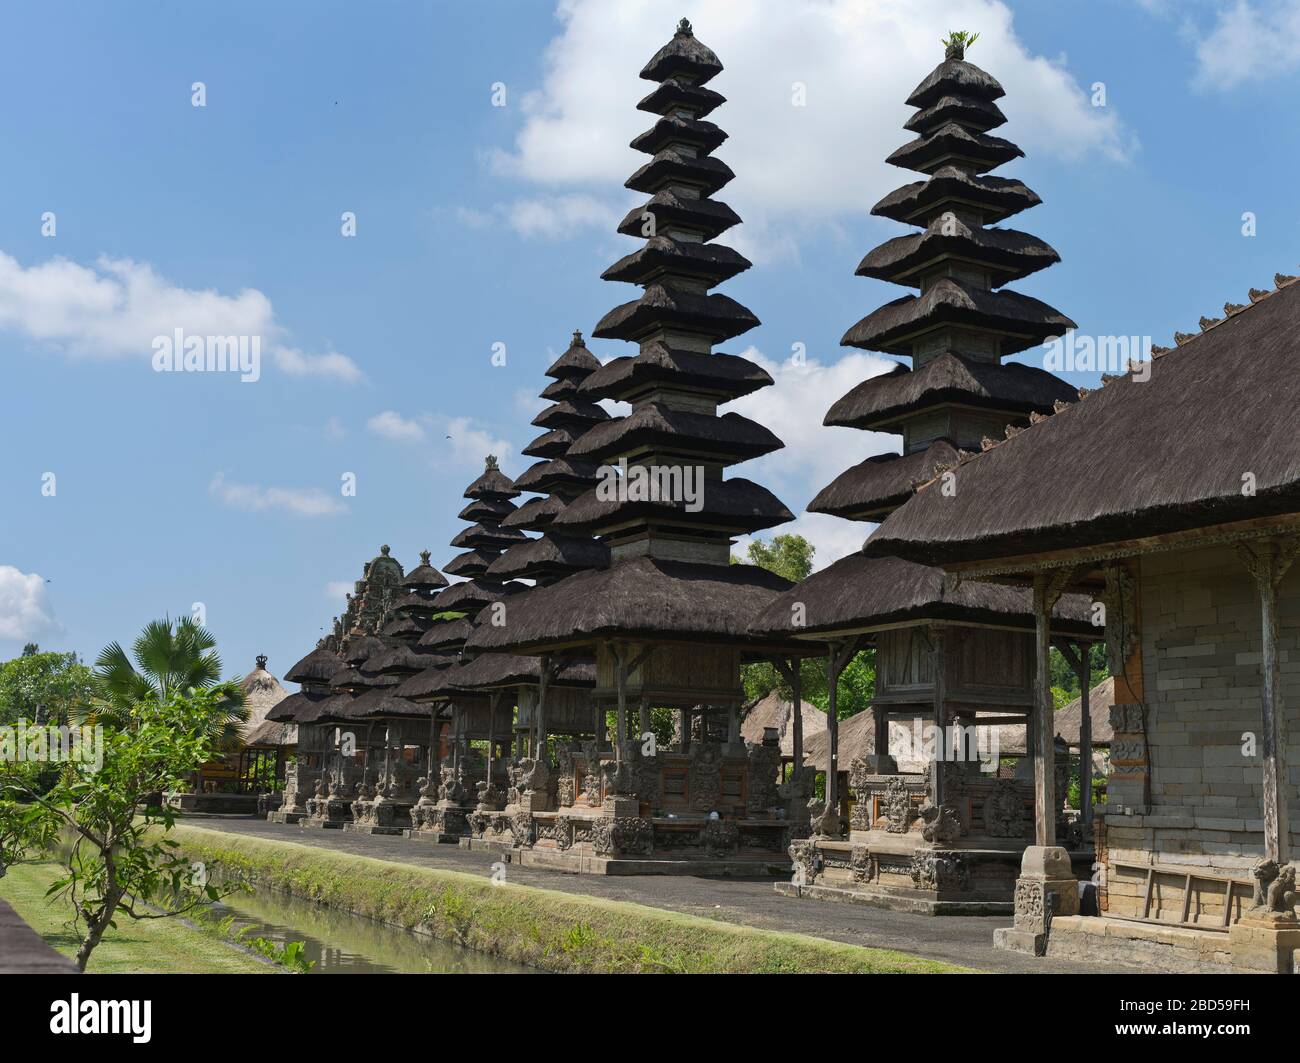 tempio reale di dh pura Taman Ayun BALI INDONESIA Indù Balinese Templi Mengwi interno Sanctum pelinggih meru torri blu cielo architettura Foto Stock